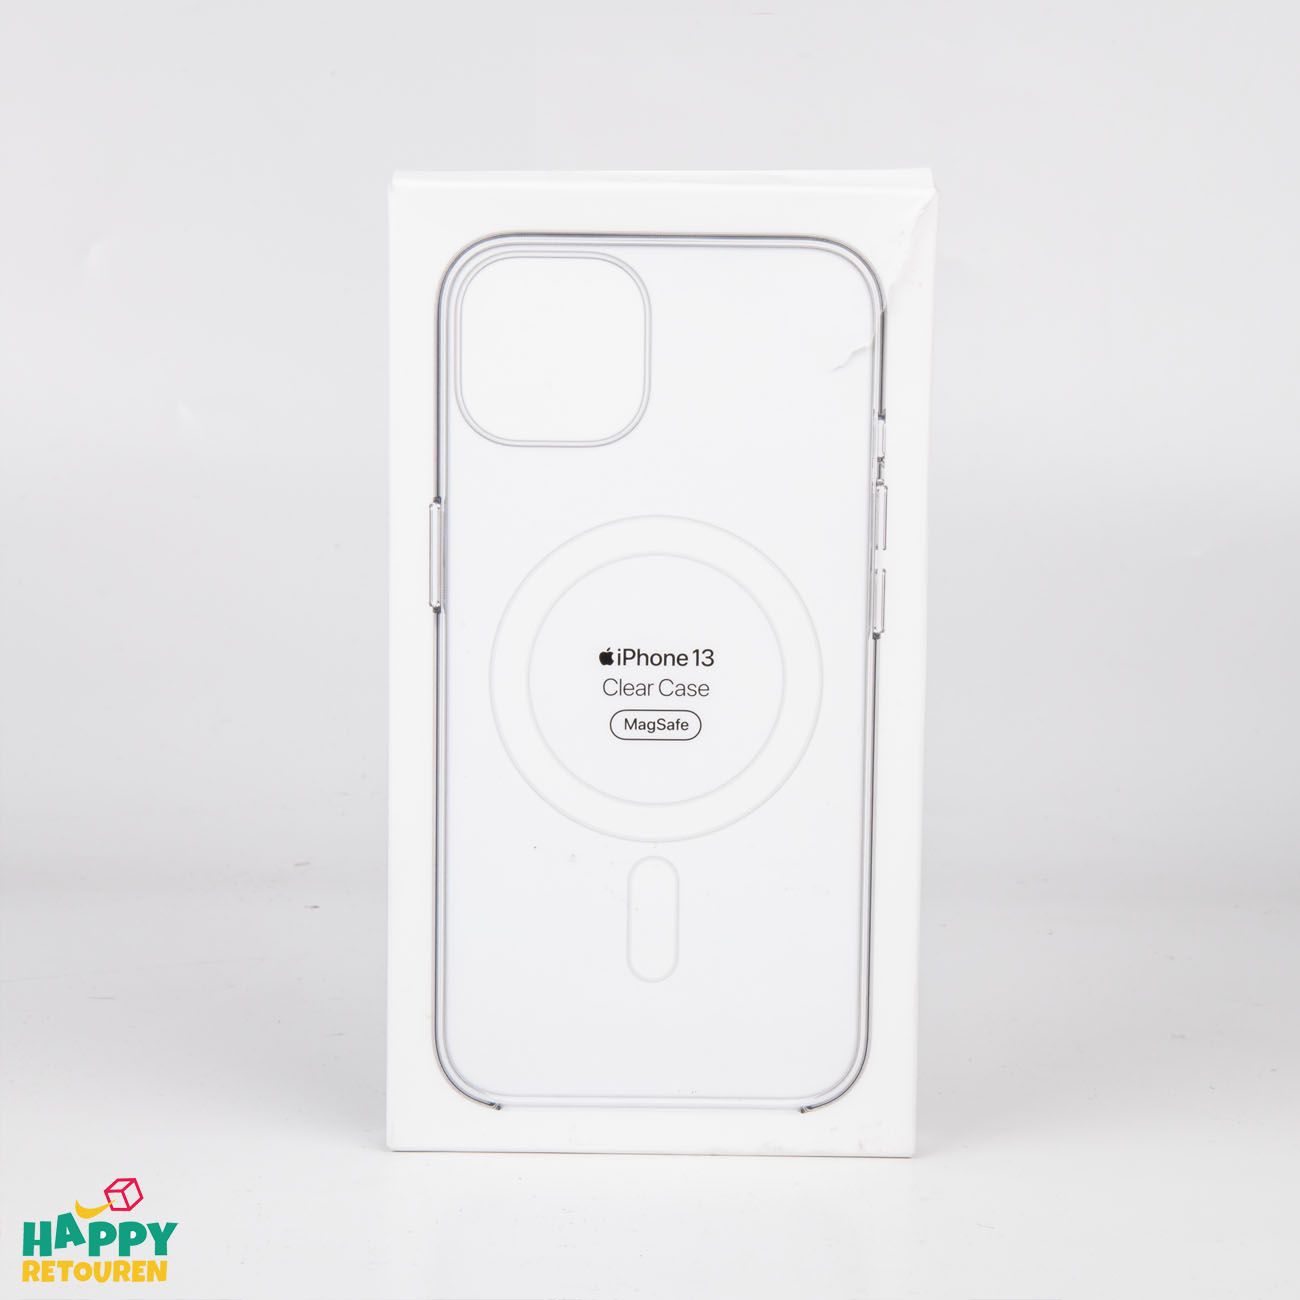 Original Apple IPhone 13 Clear MagSafe Retouren - Hülle Schutzhülle mit Case Happy